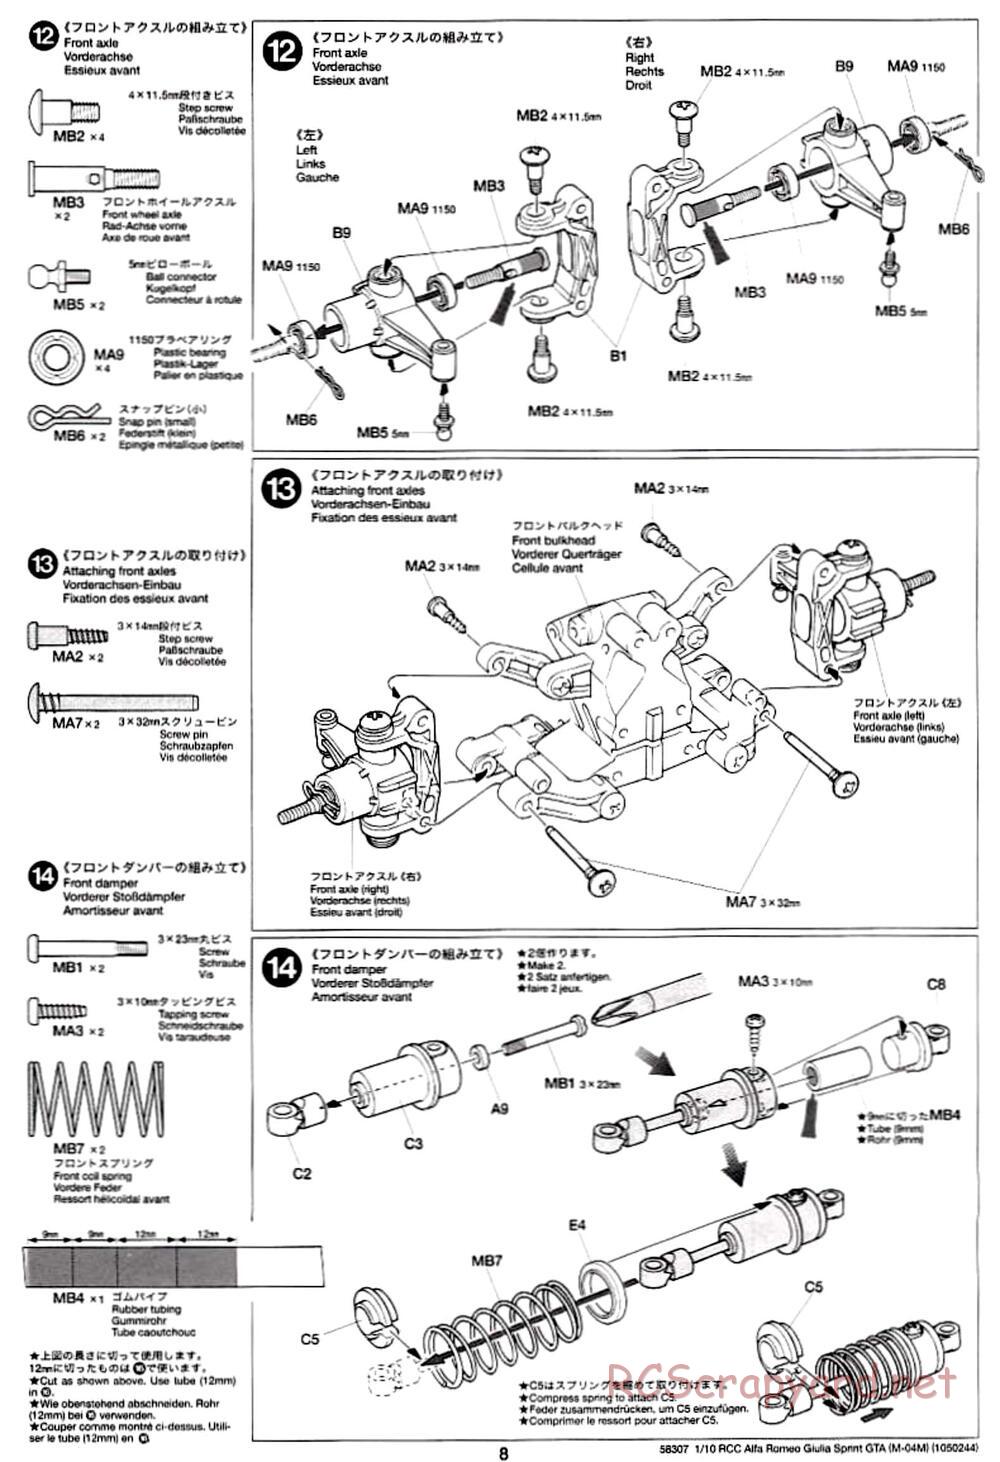 Tamiya - Alfa Romeo Giulia Sprint GTA - M04M Chassis - Manual - Page 8